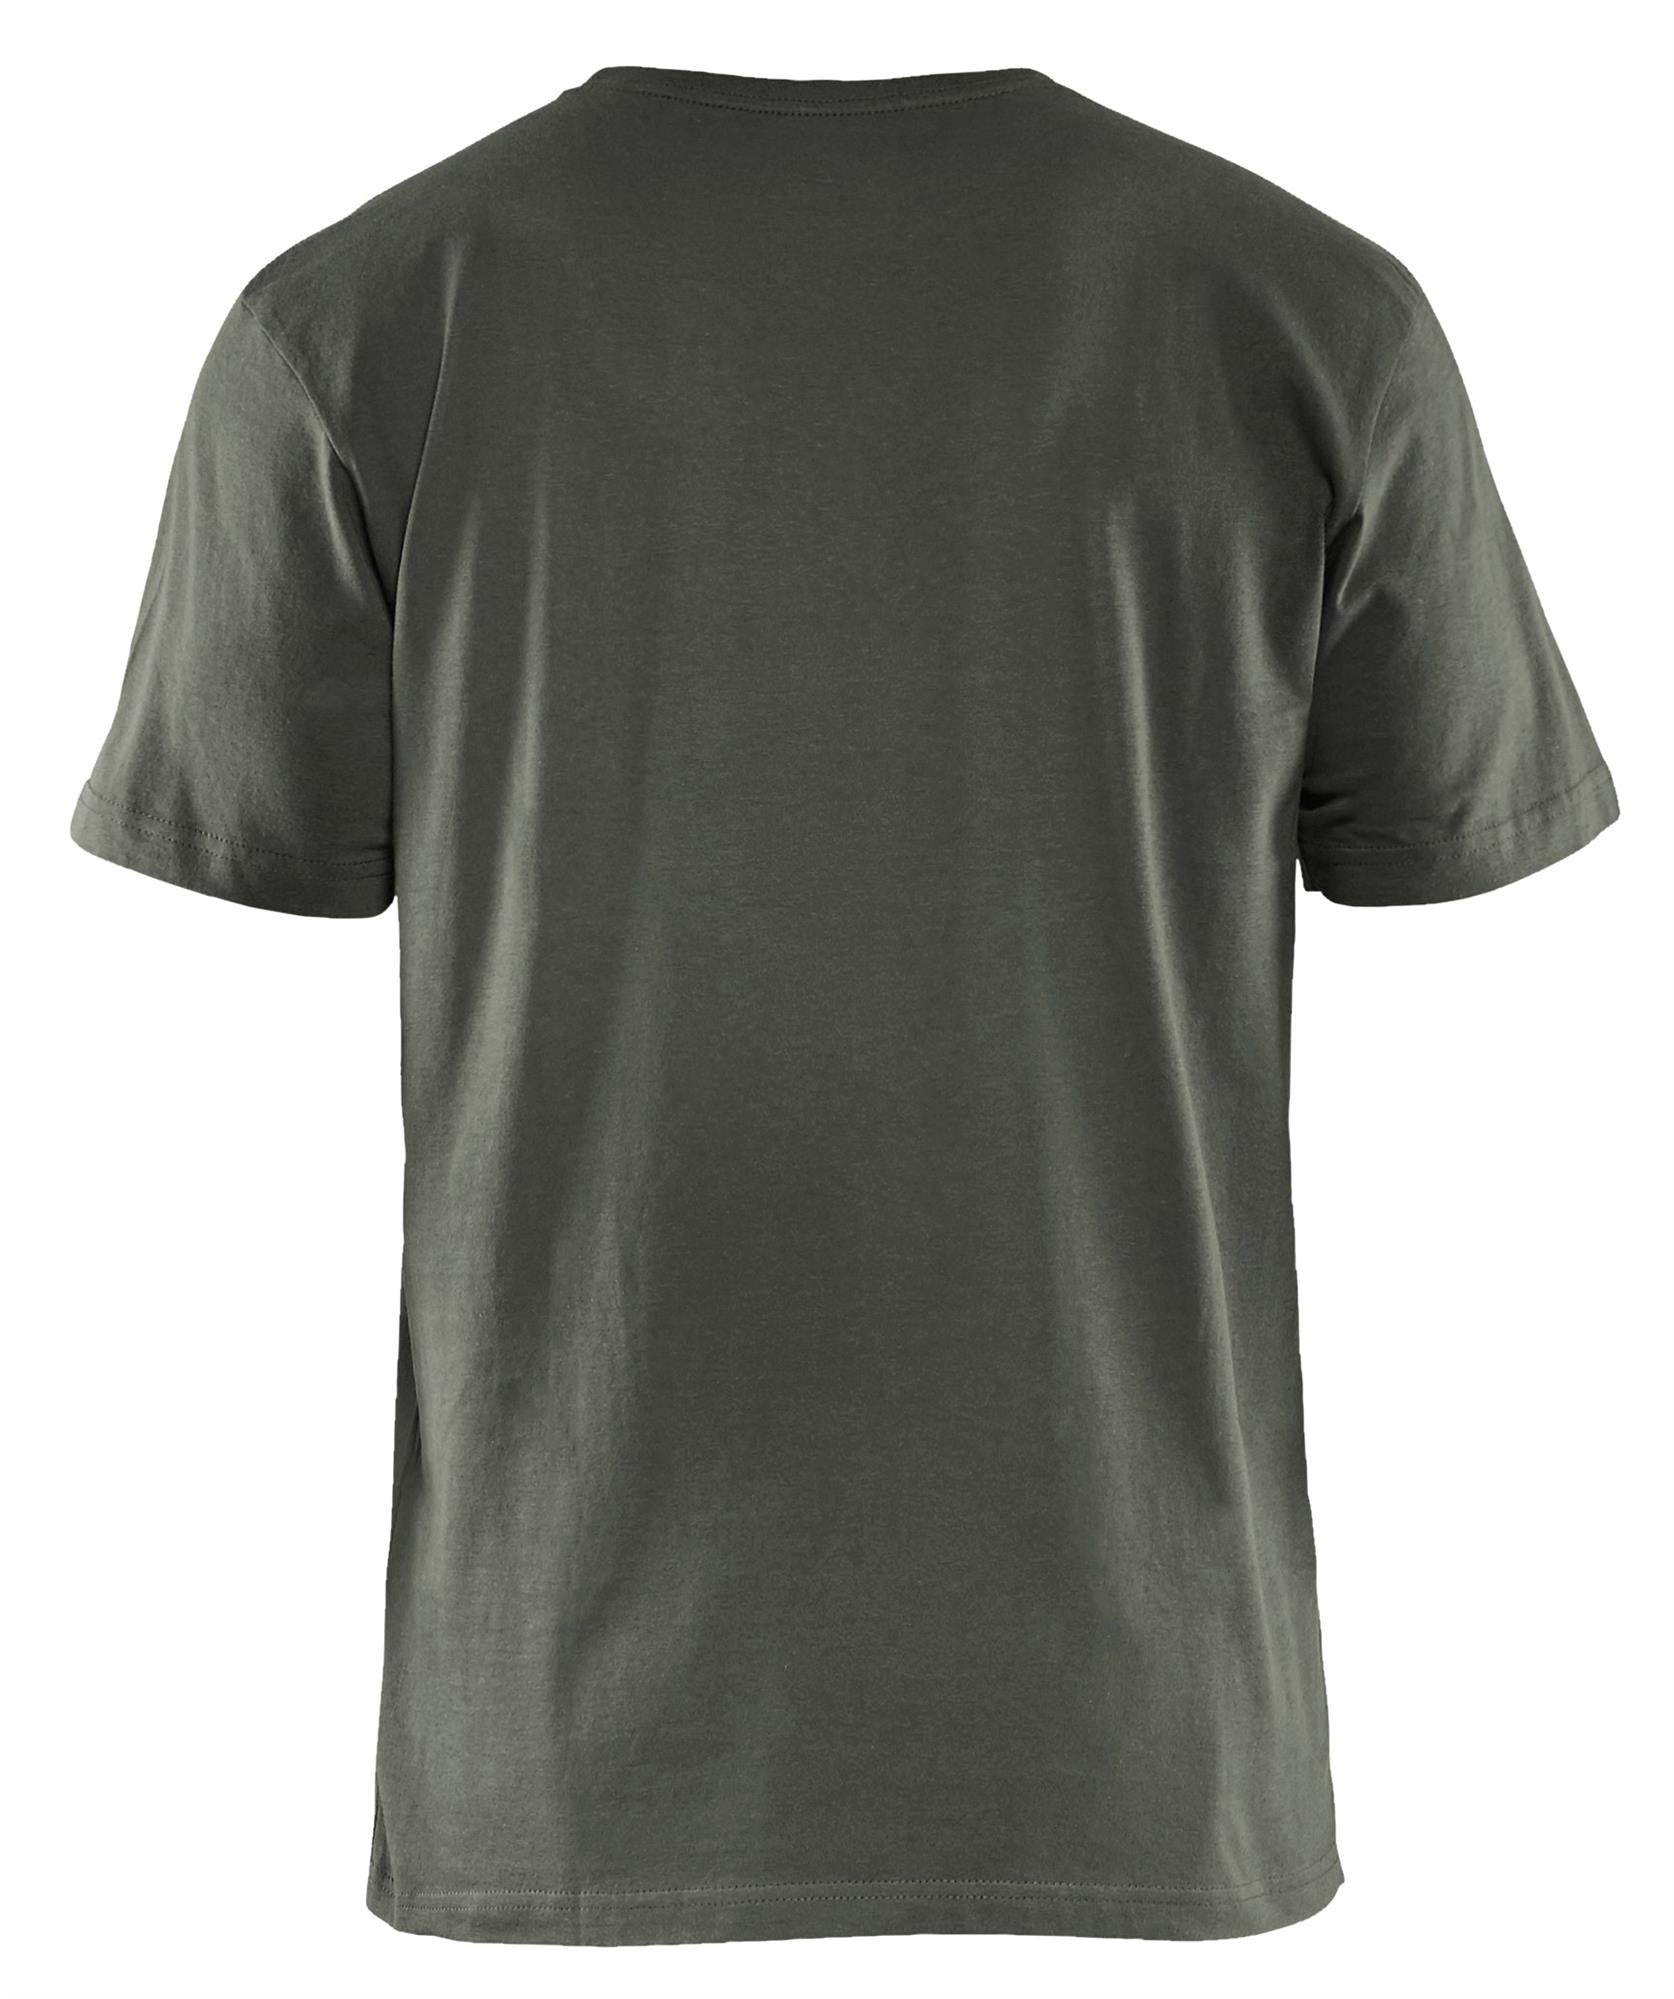 Blaklader army green men's cotton short-sleeve T-shirt #3525